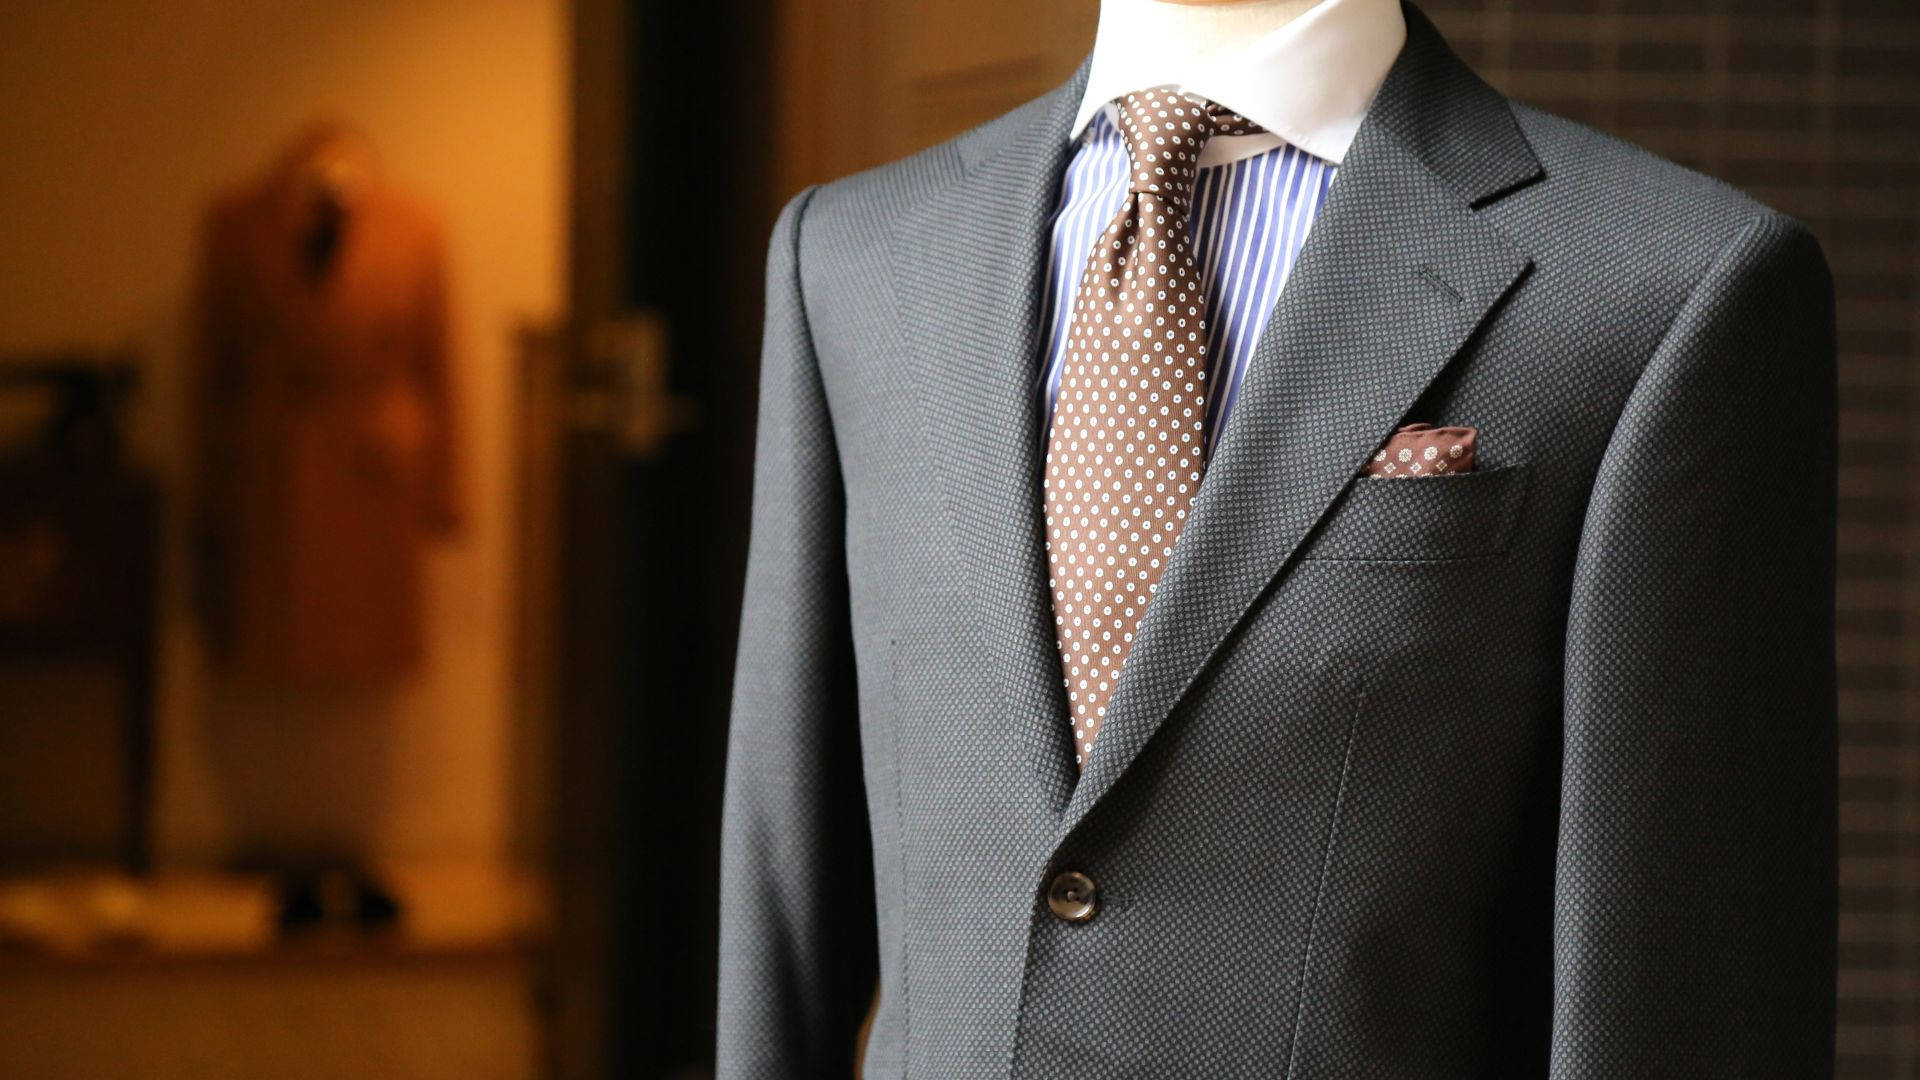 Italian Tailored Suit Wear Background